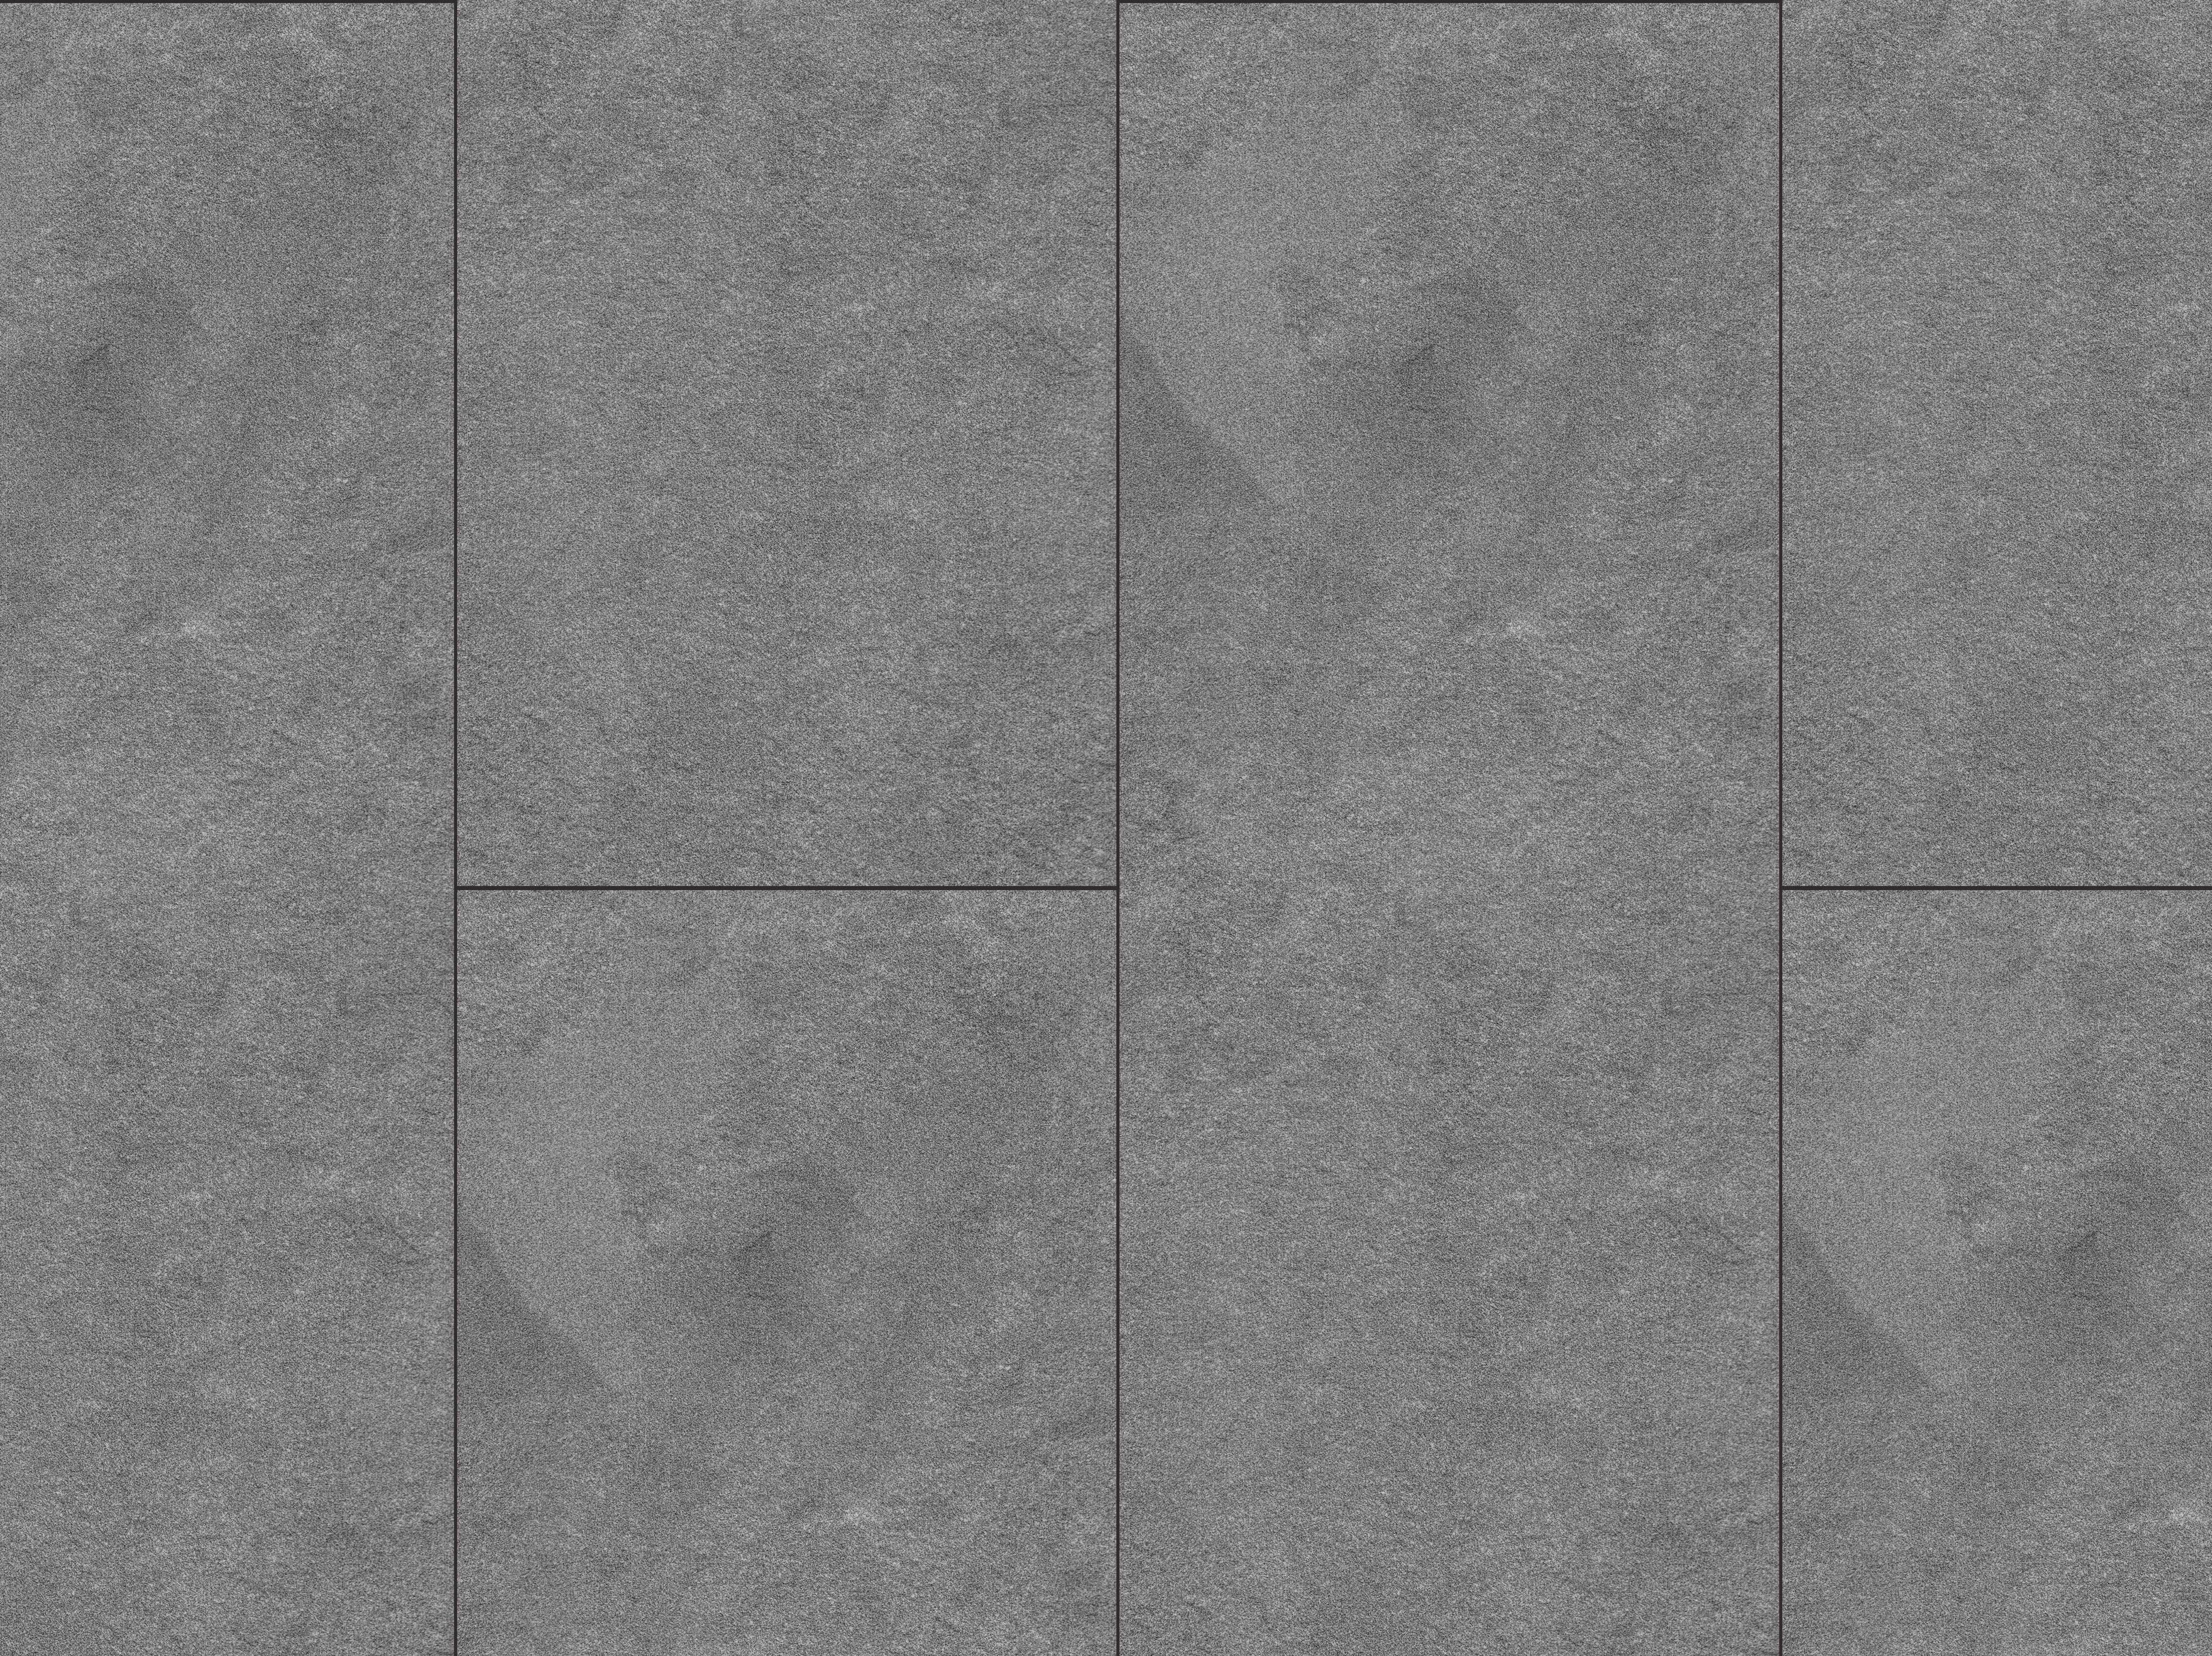 Tile Floor Textures Seamless Flooring | Wall Decor | Pinterest ...